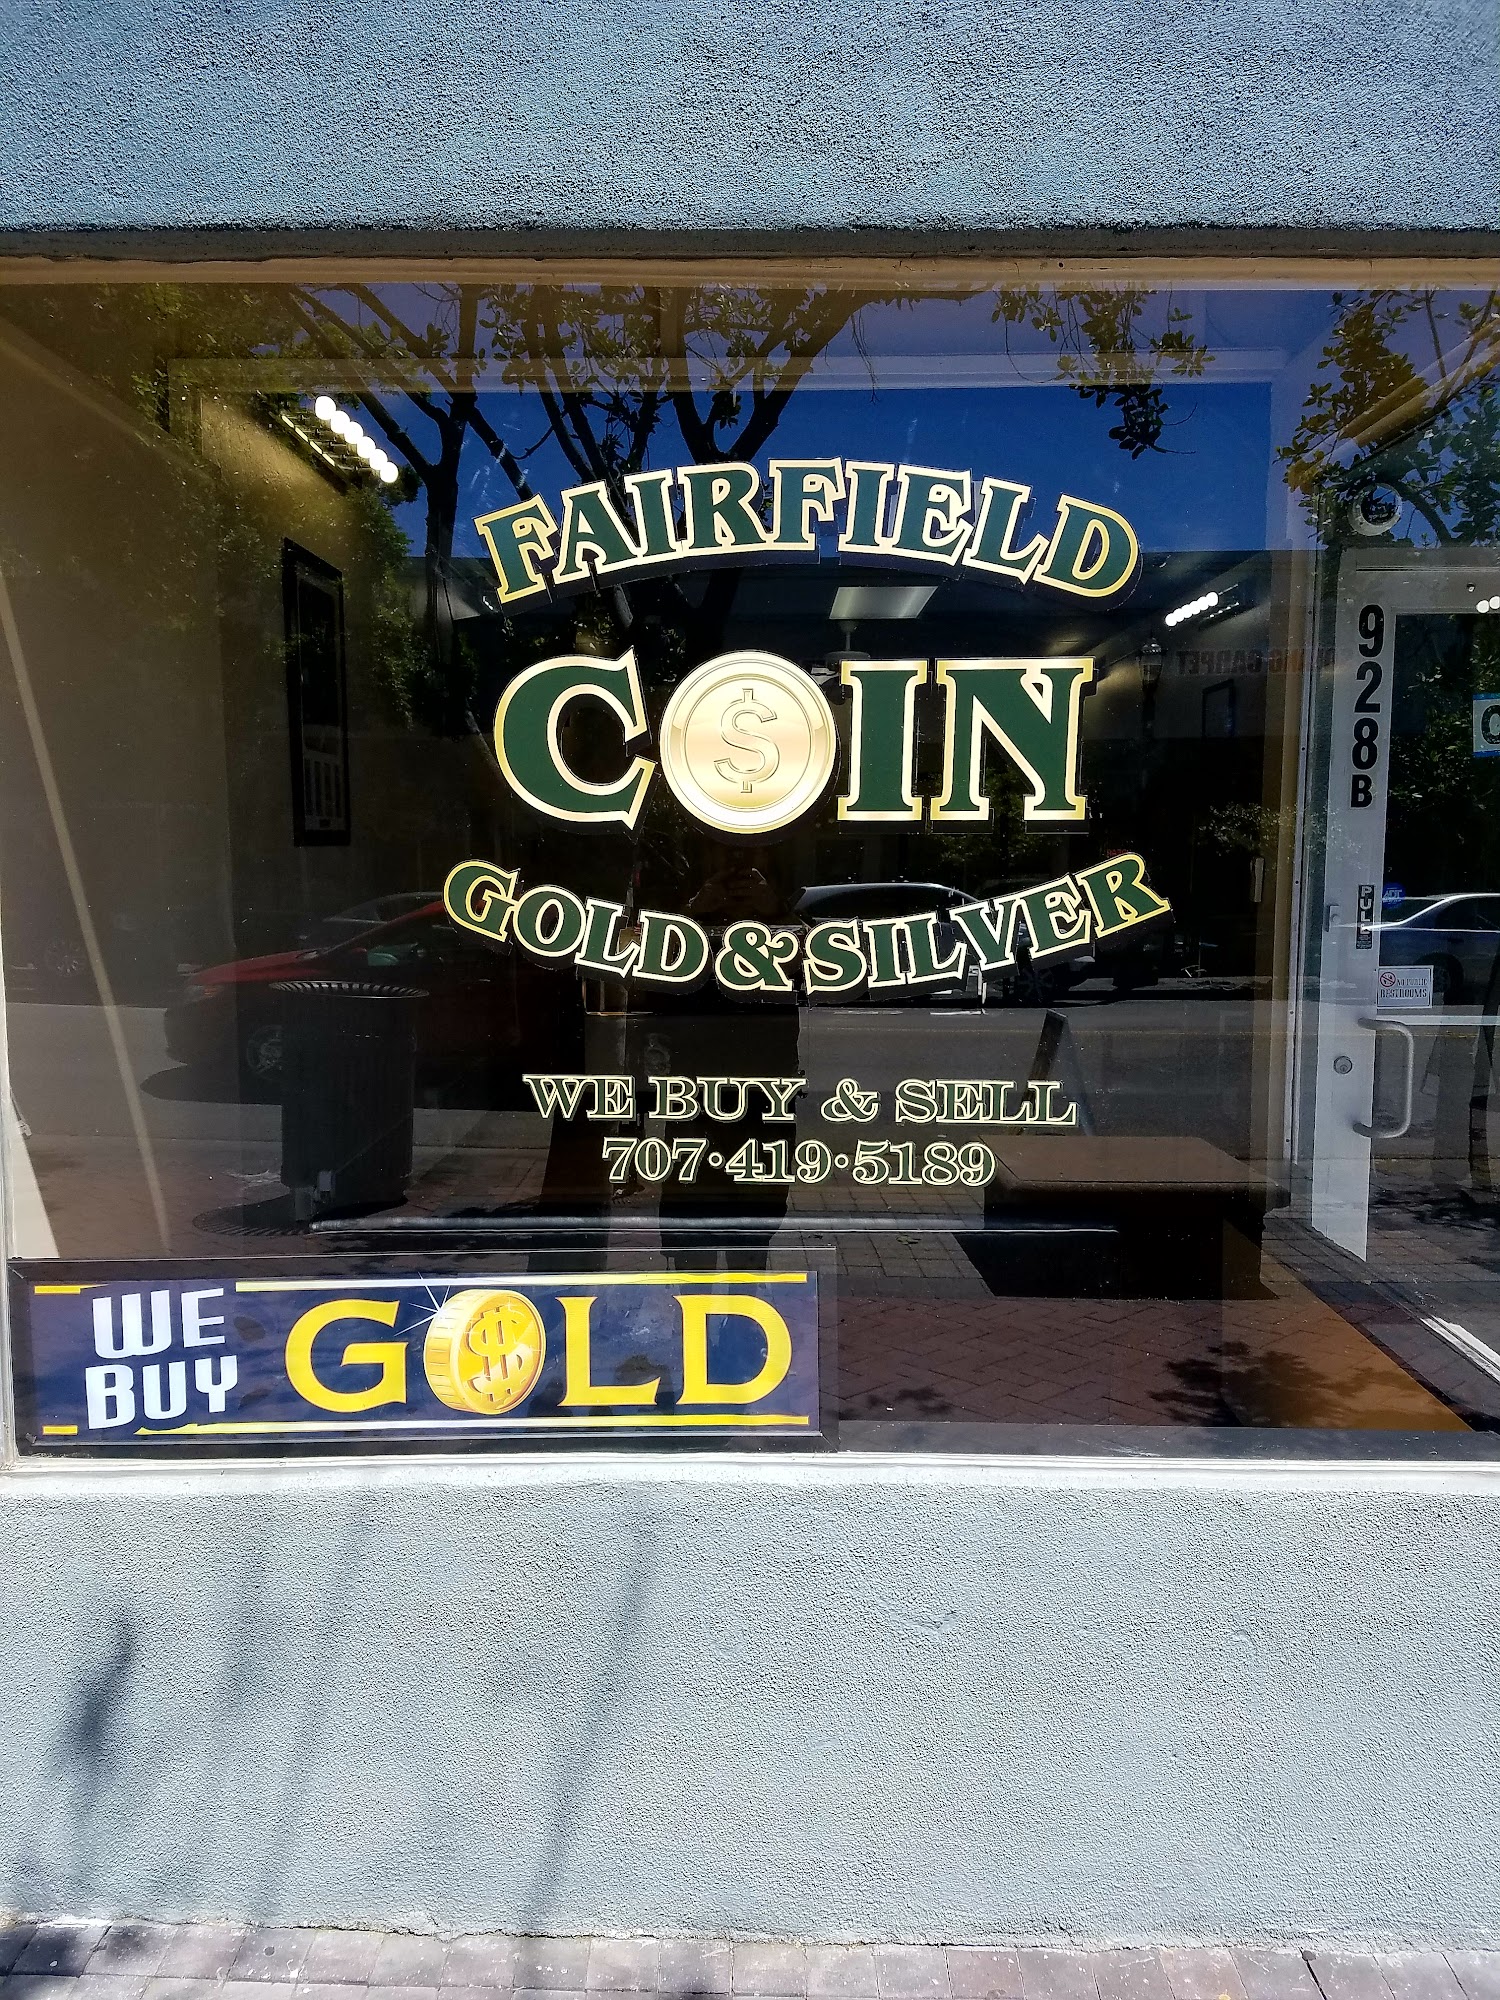 Fairfield Coin, Gold & Silver